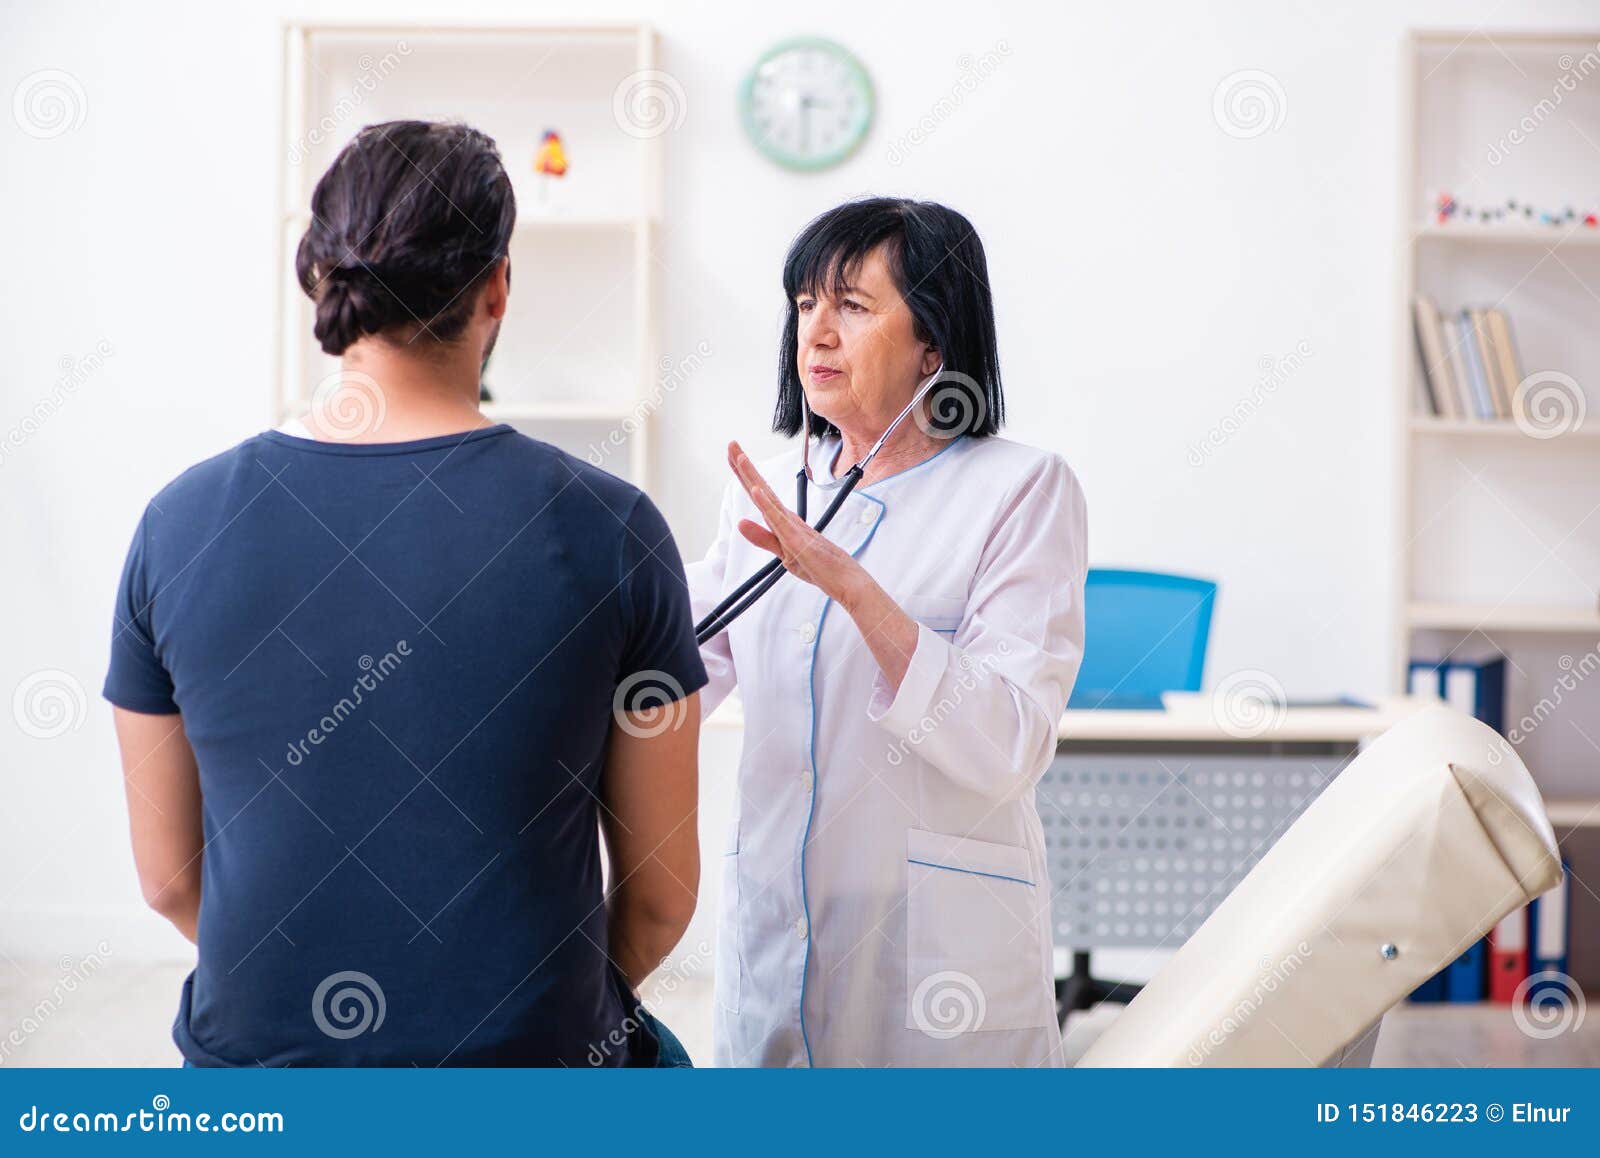 Жену врач видео. Врачи мужчина и женщина. Картина женщина врач осматривает пациента мужчину. Сексолог женщина и пациент мужчина. Картинка женщина врач пациент мужчин.